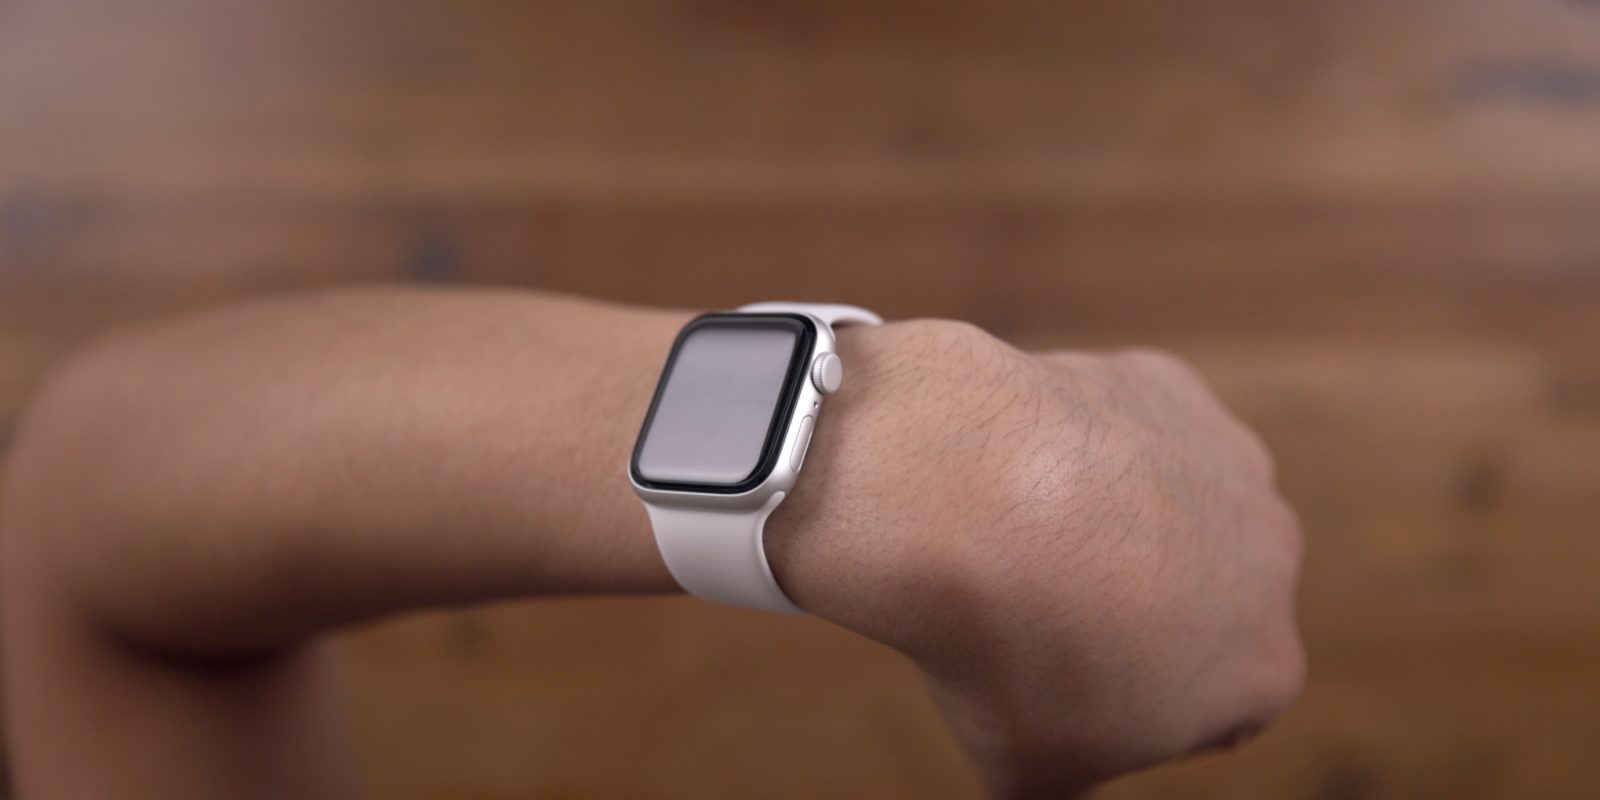 efterfølger kondensator specielt Here are some of the best Apple Watch fitness apps - 9to5Mac